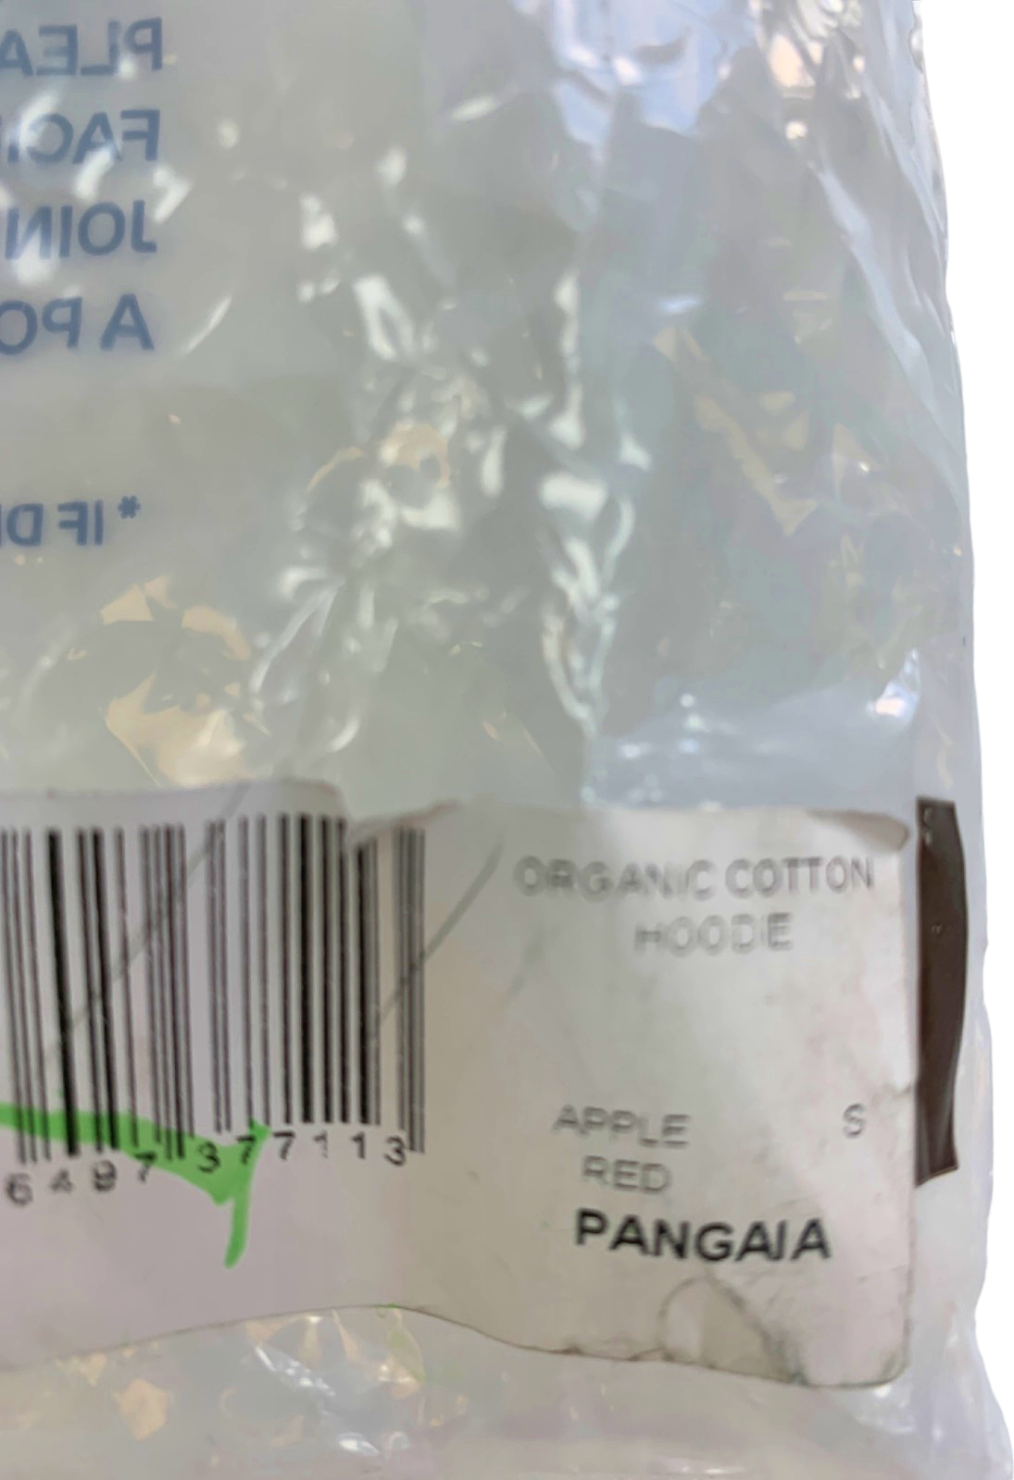 PANGAIA Apple Red Organic Cotton Hoodie S